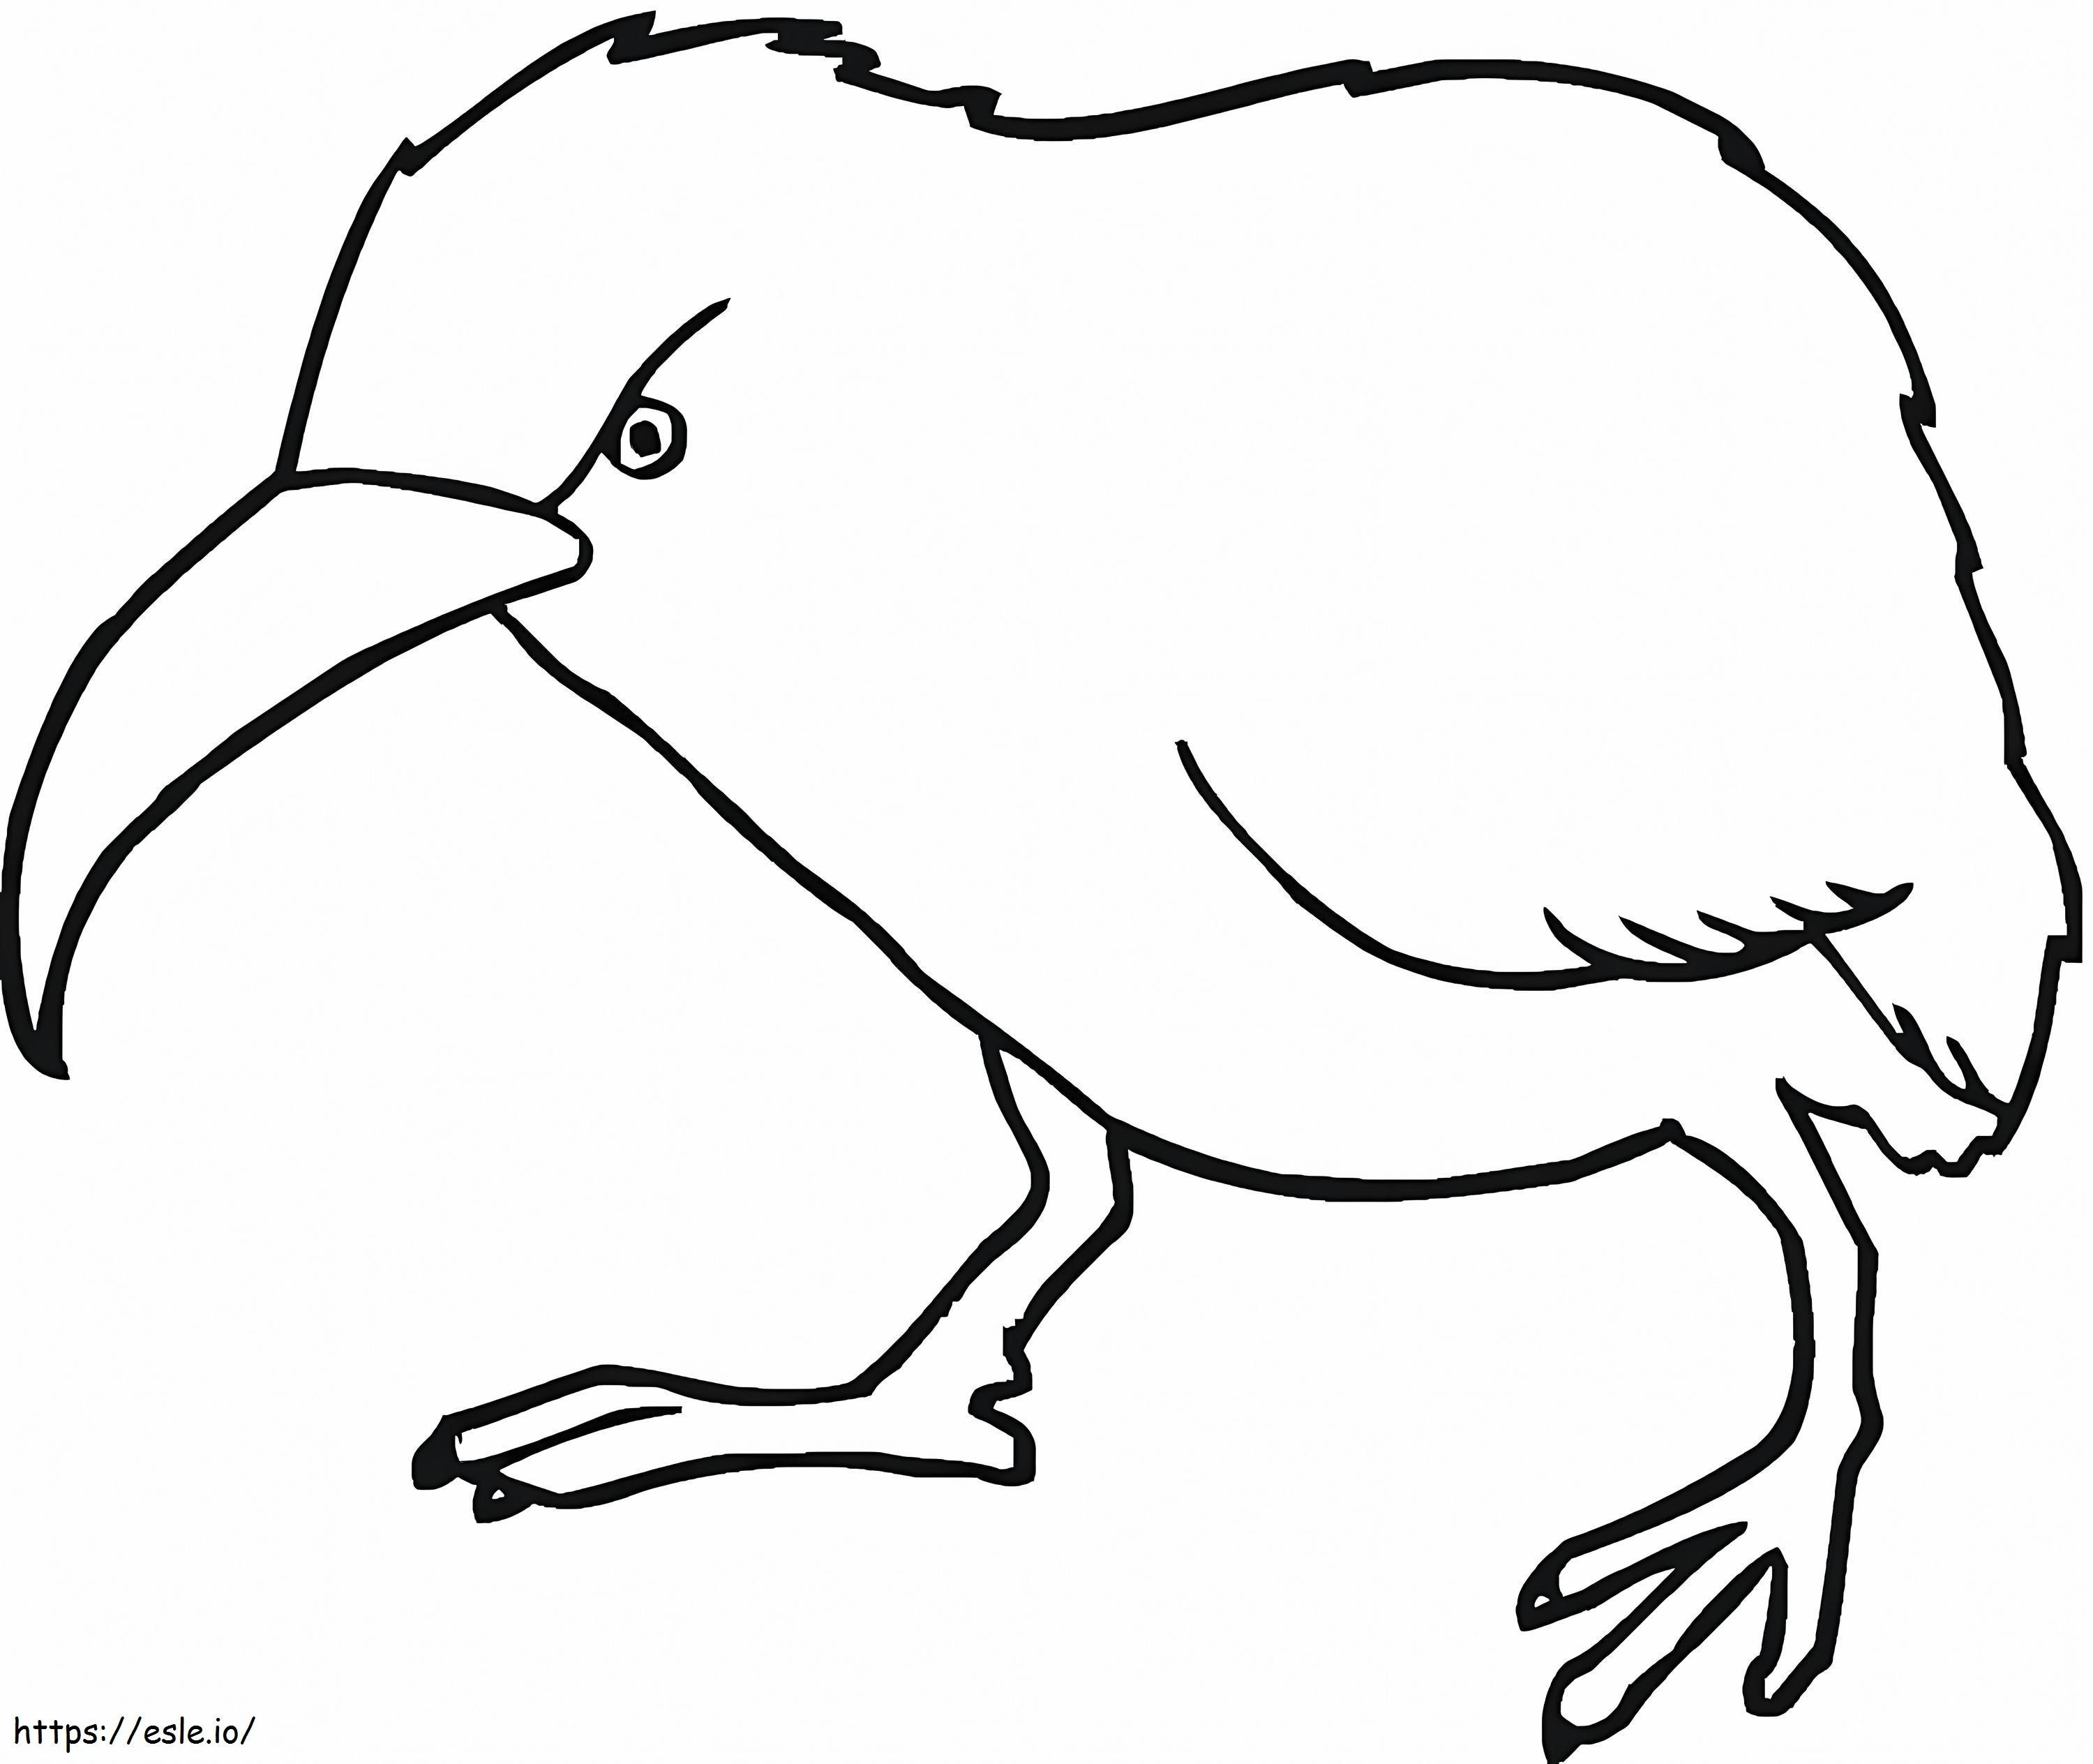 Angry Kiwi Bird kifestő